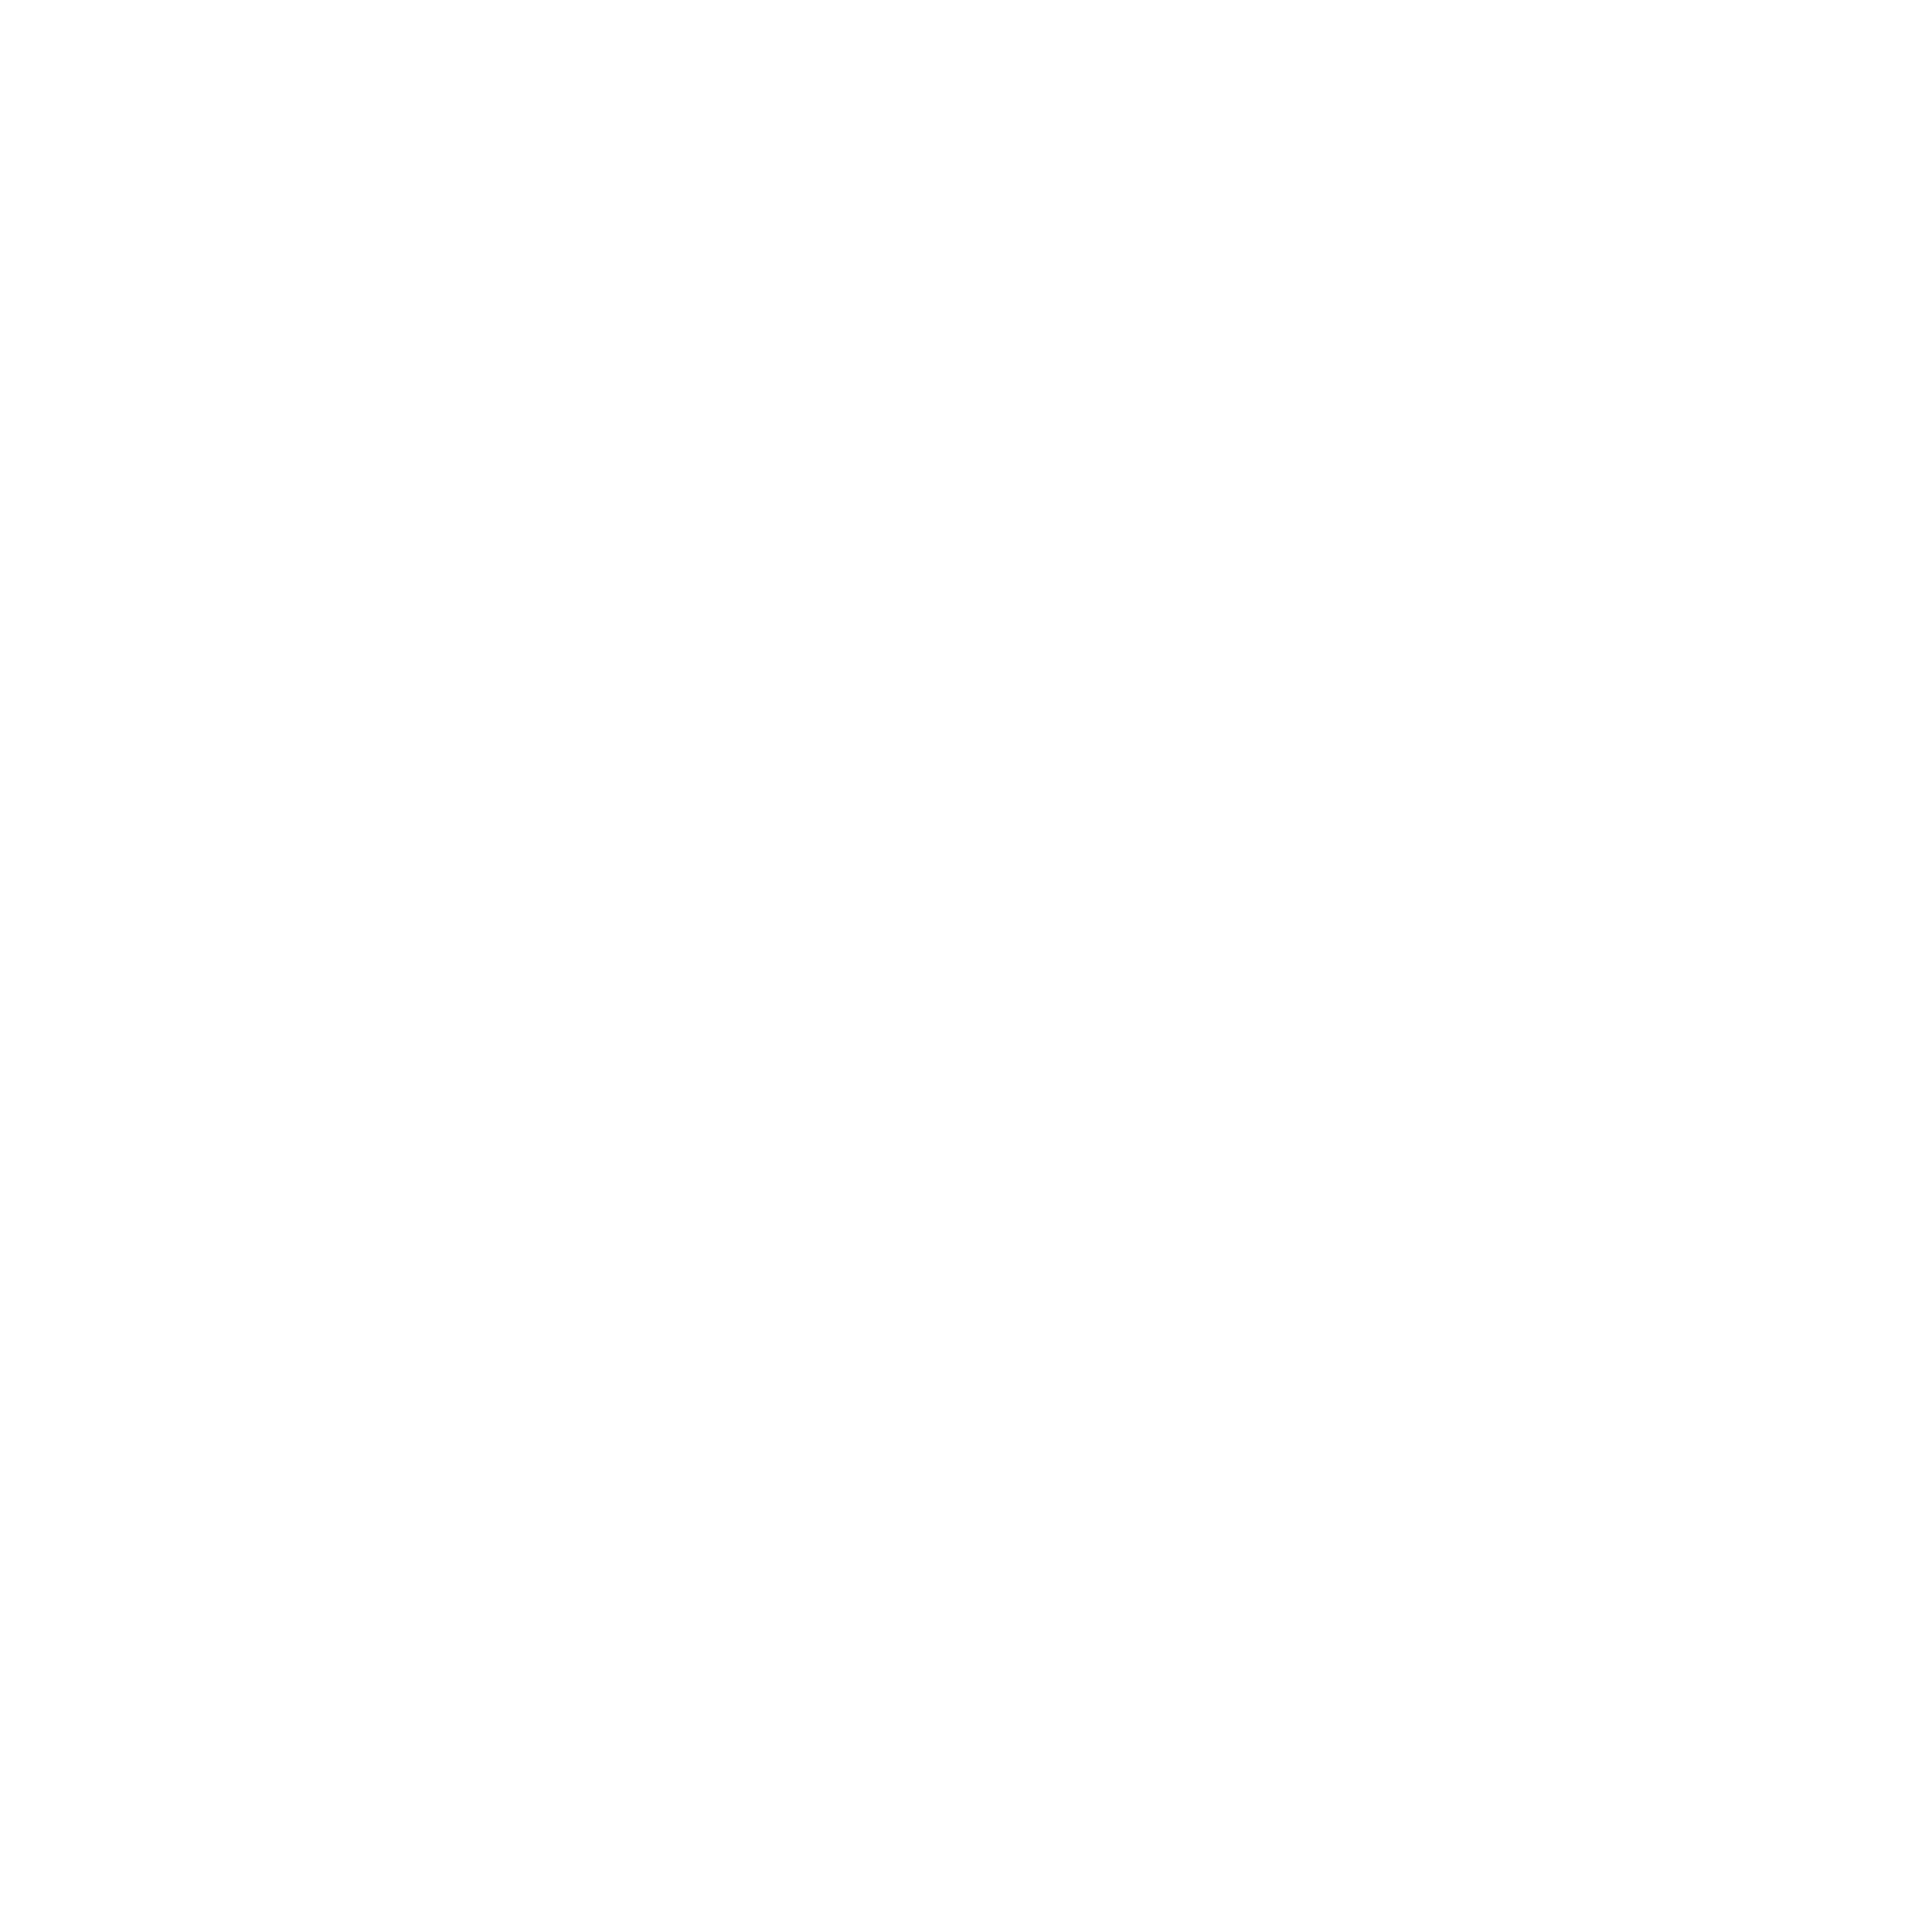 10 Months Interest Free Credit